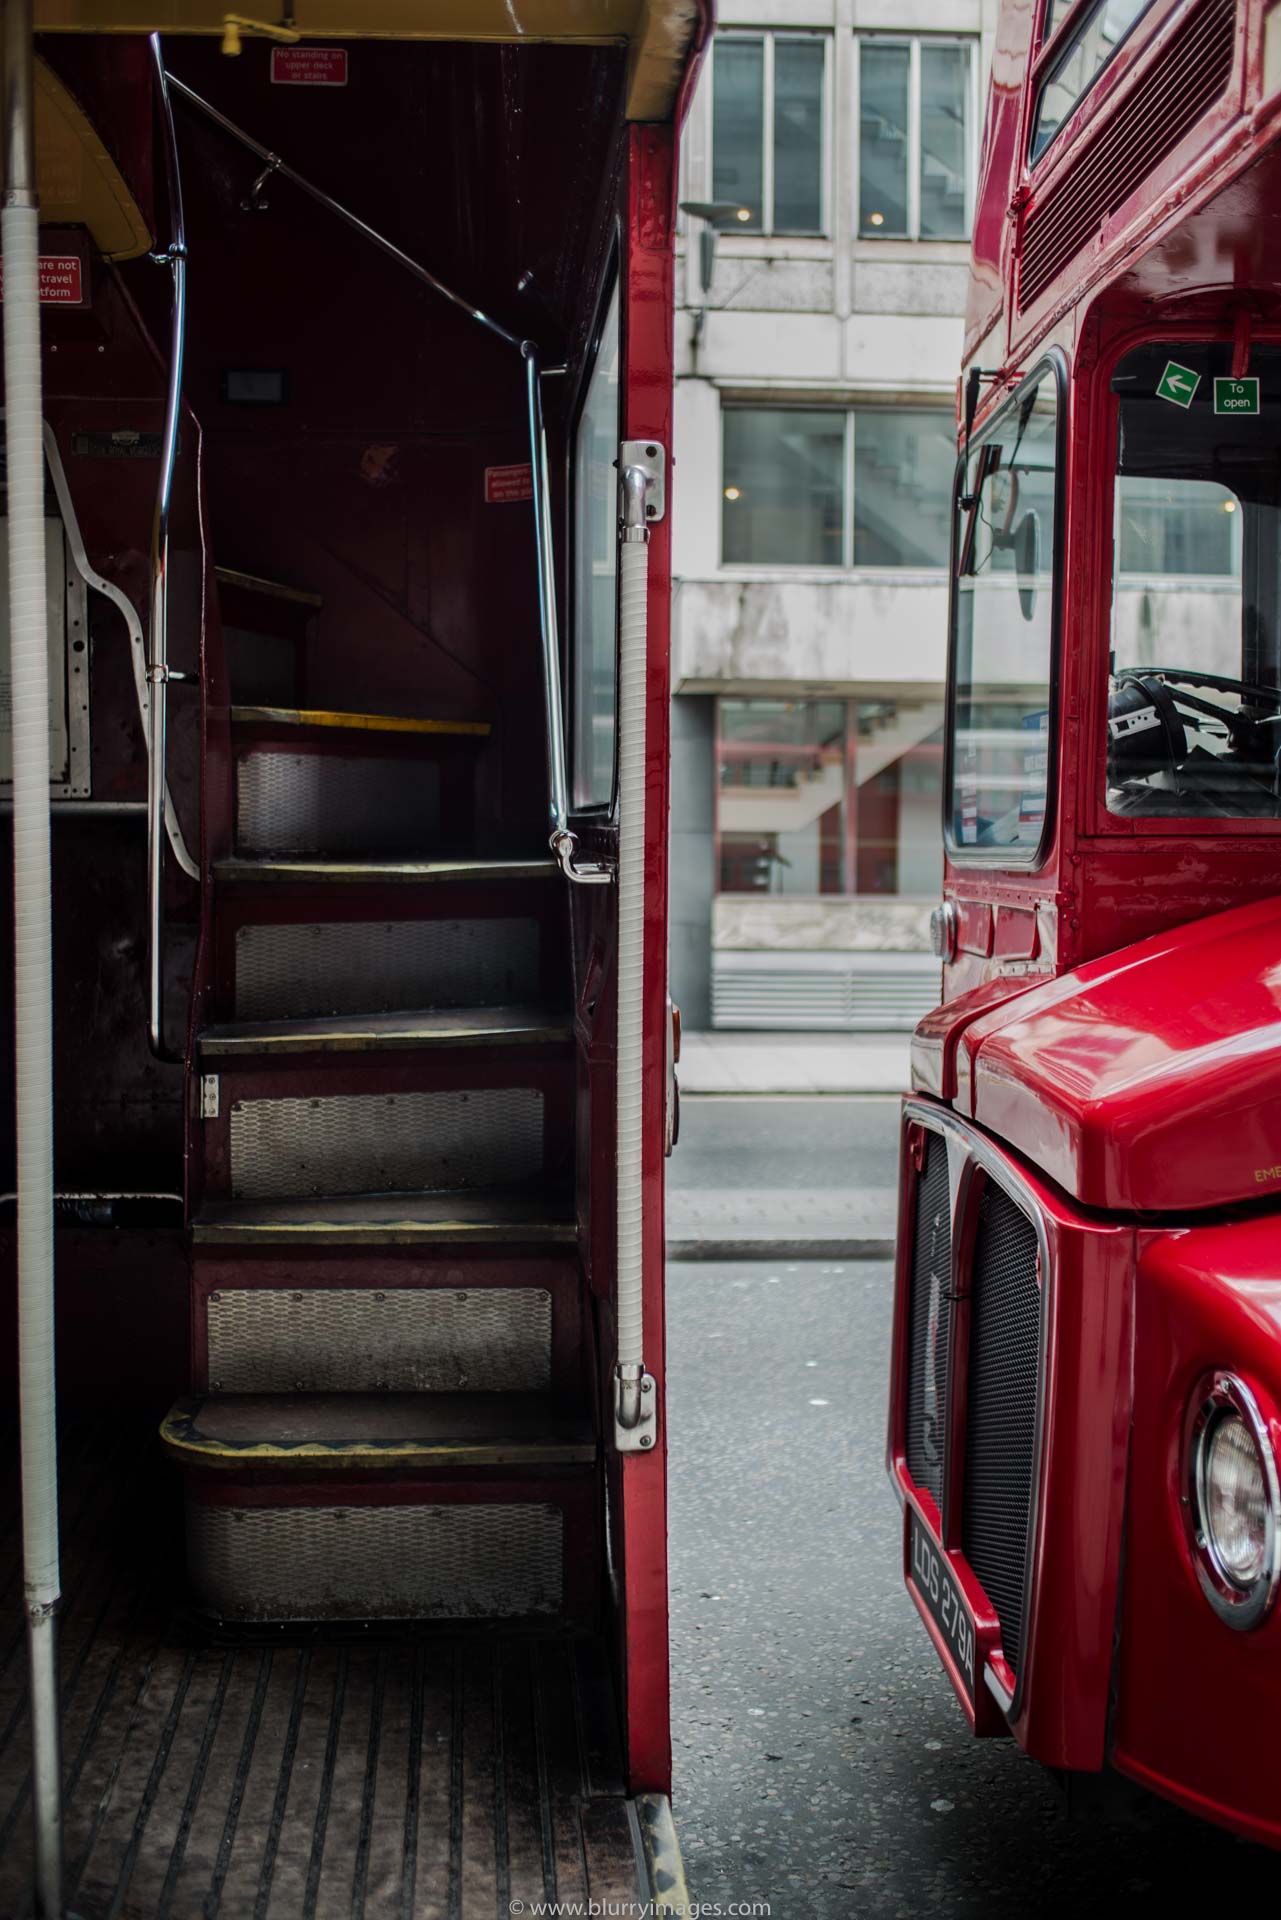 bus, red bus, london bus